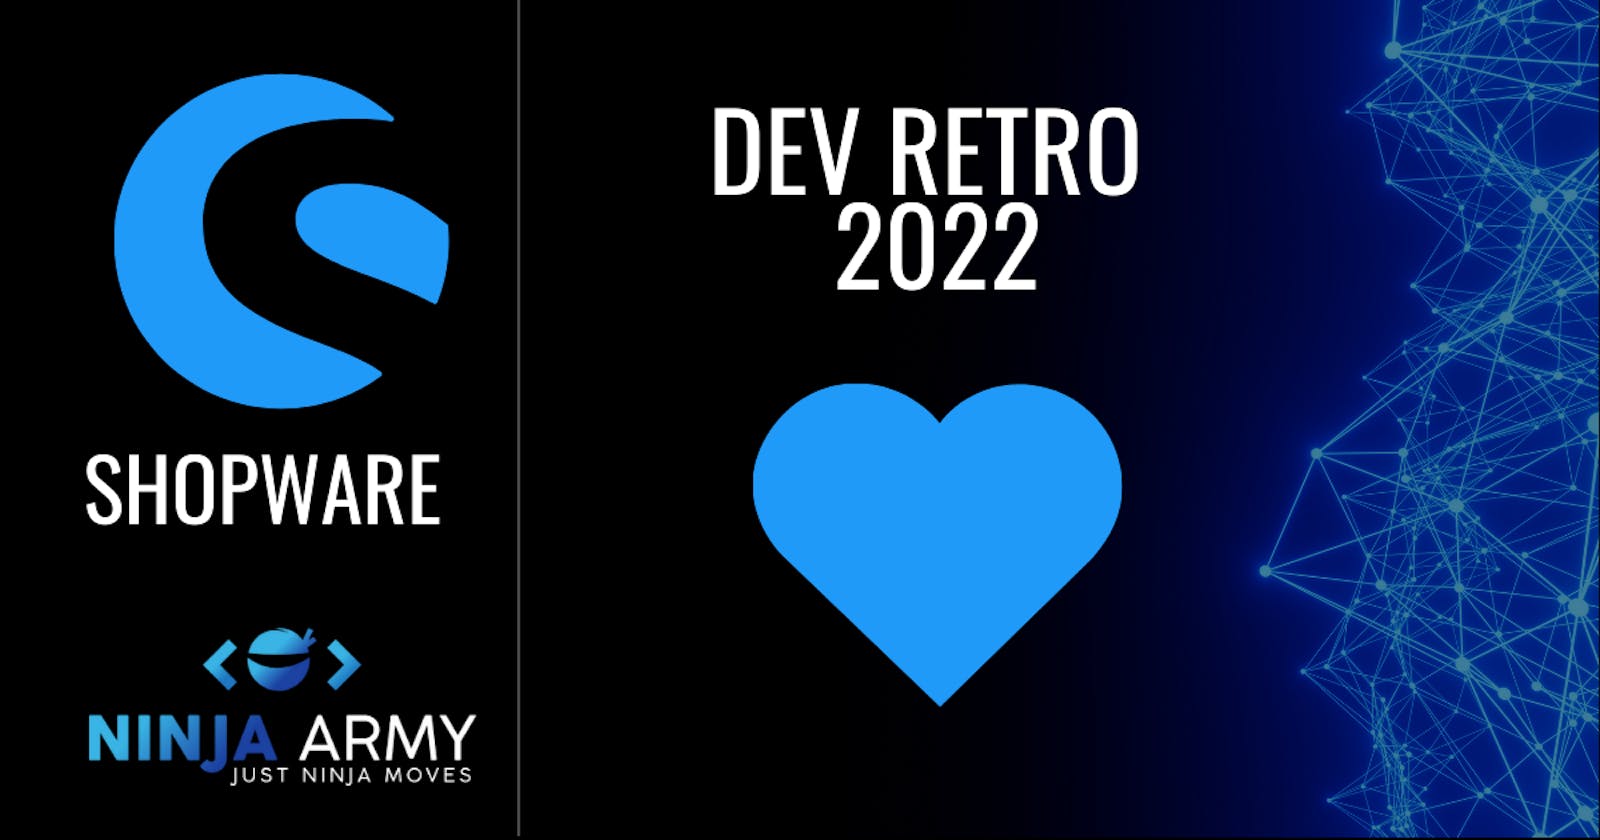 Dev Retro 2022 - How I fell in love with Shopware